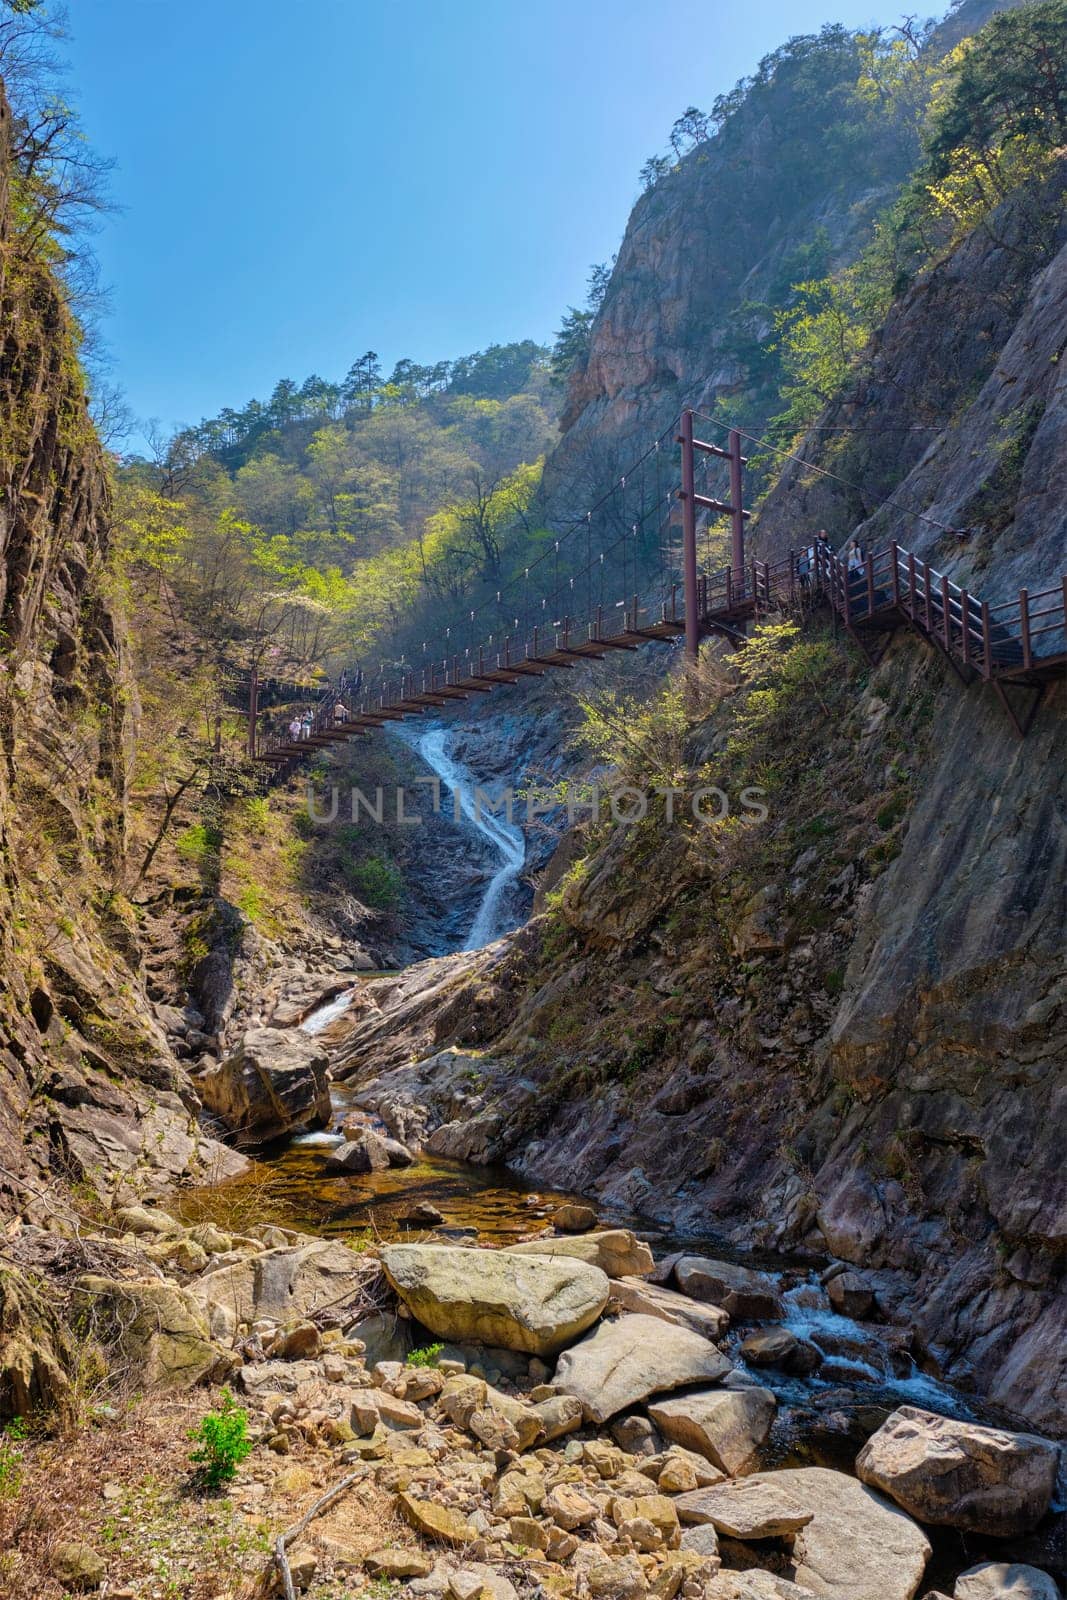 Footbridge on hiking trail with hikers toursits at Biryong Falls Waterfall in Seoraksan National Park, South Korea